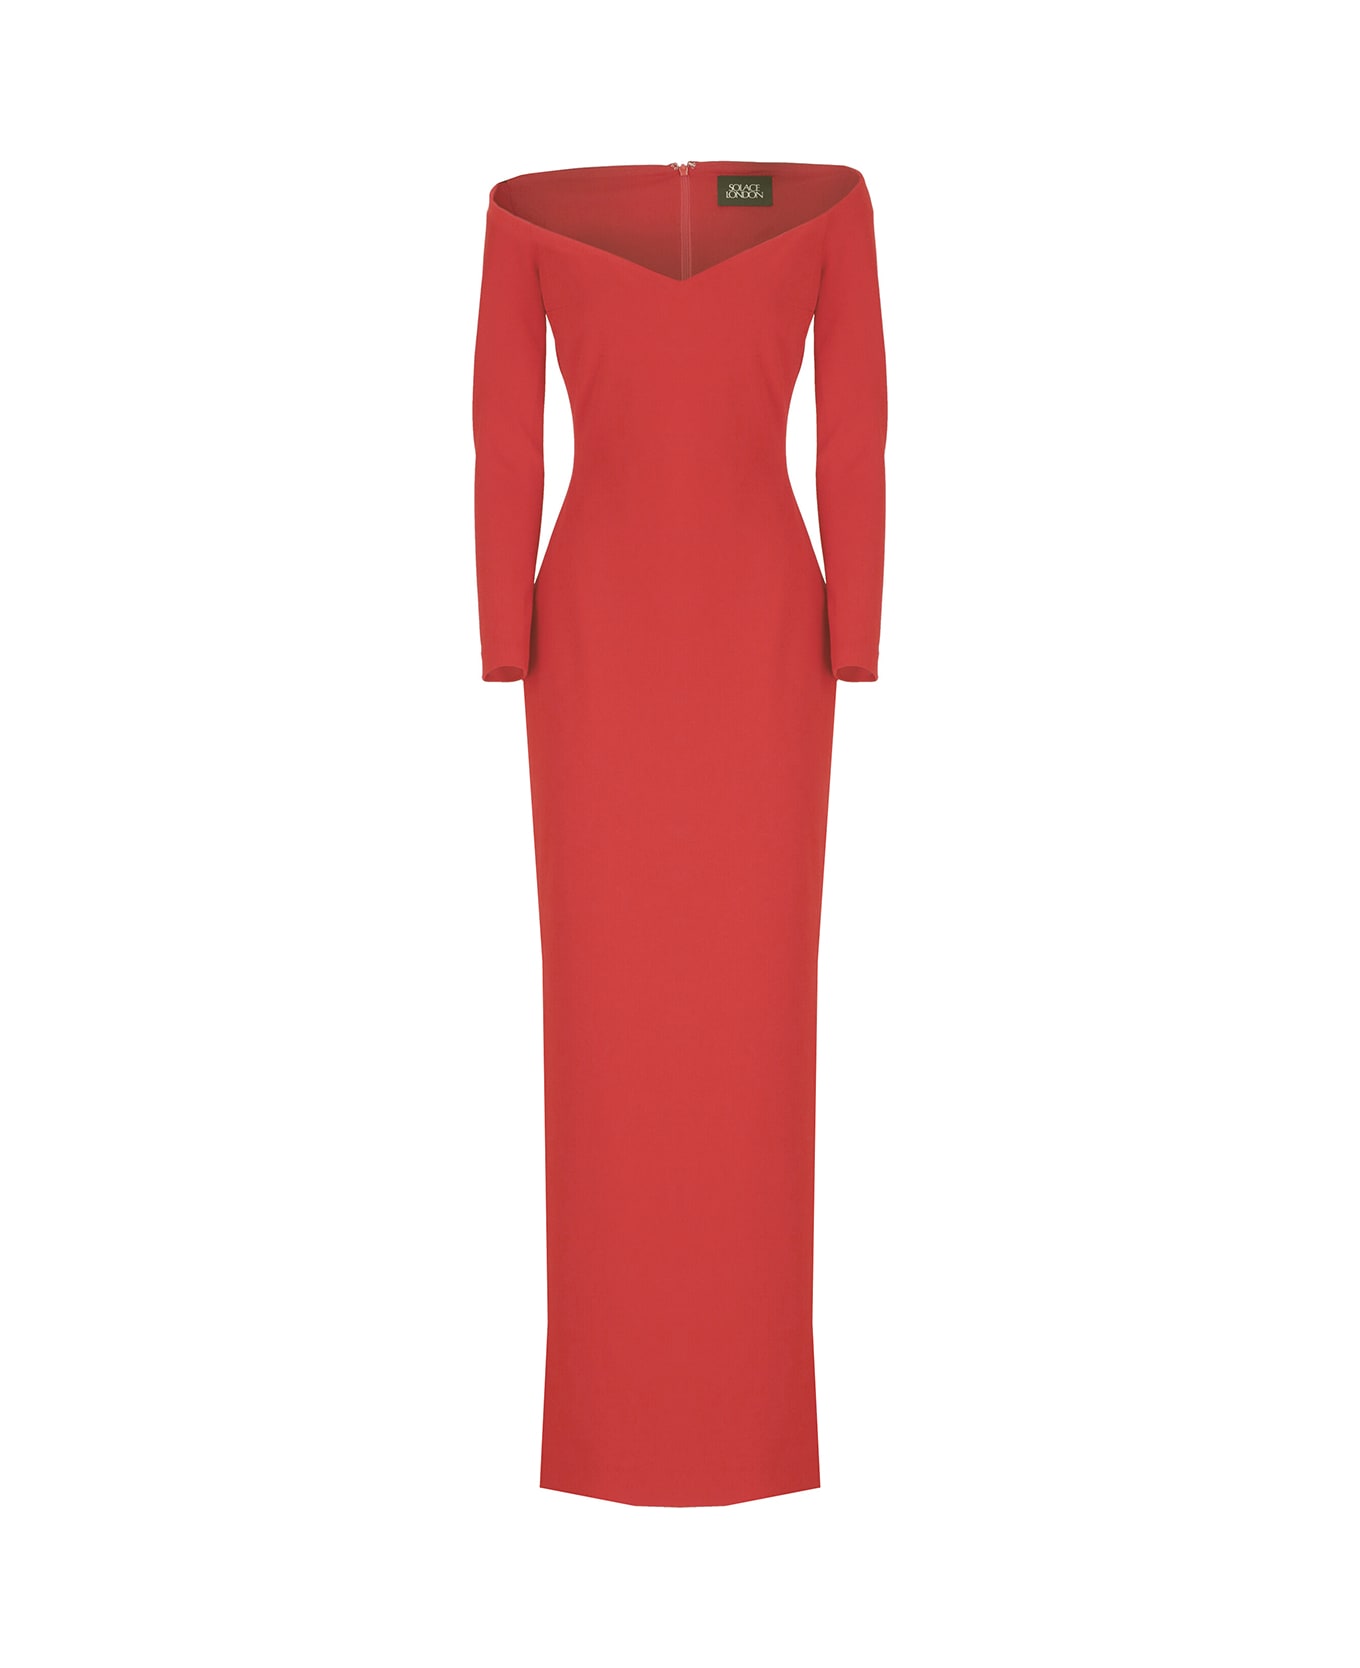 Solace London Tara Maxi Dress - Red